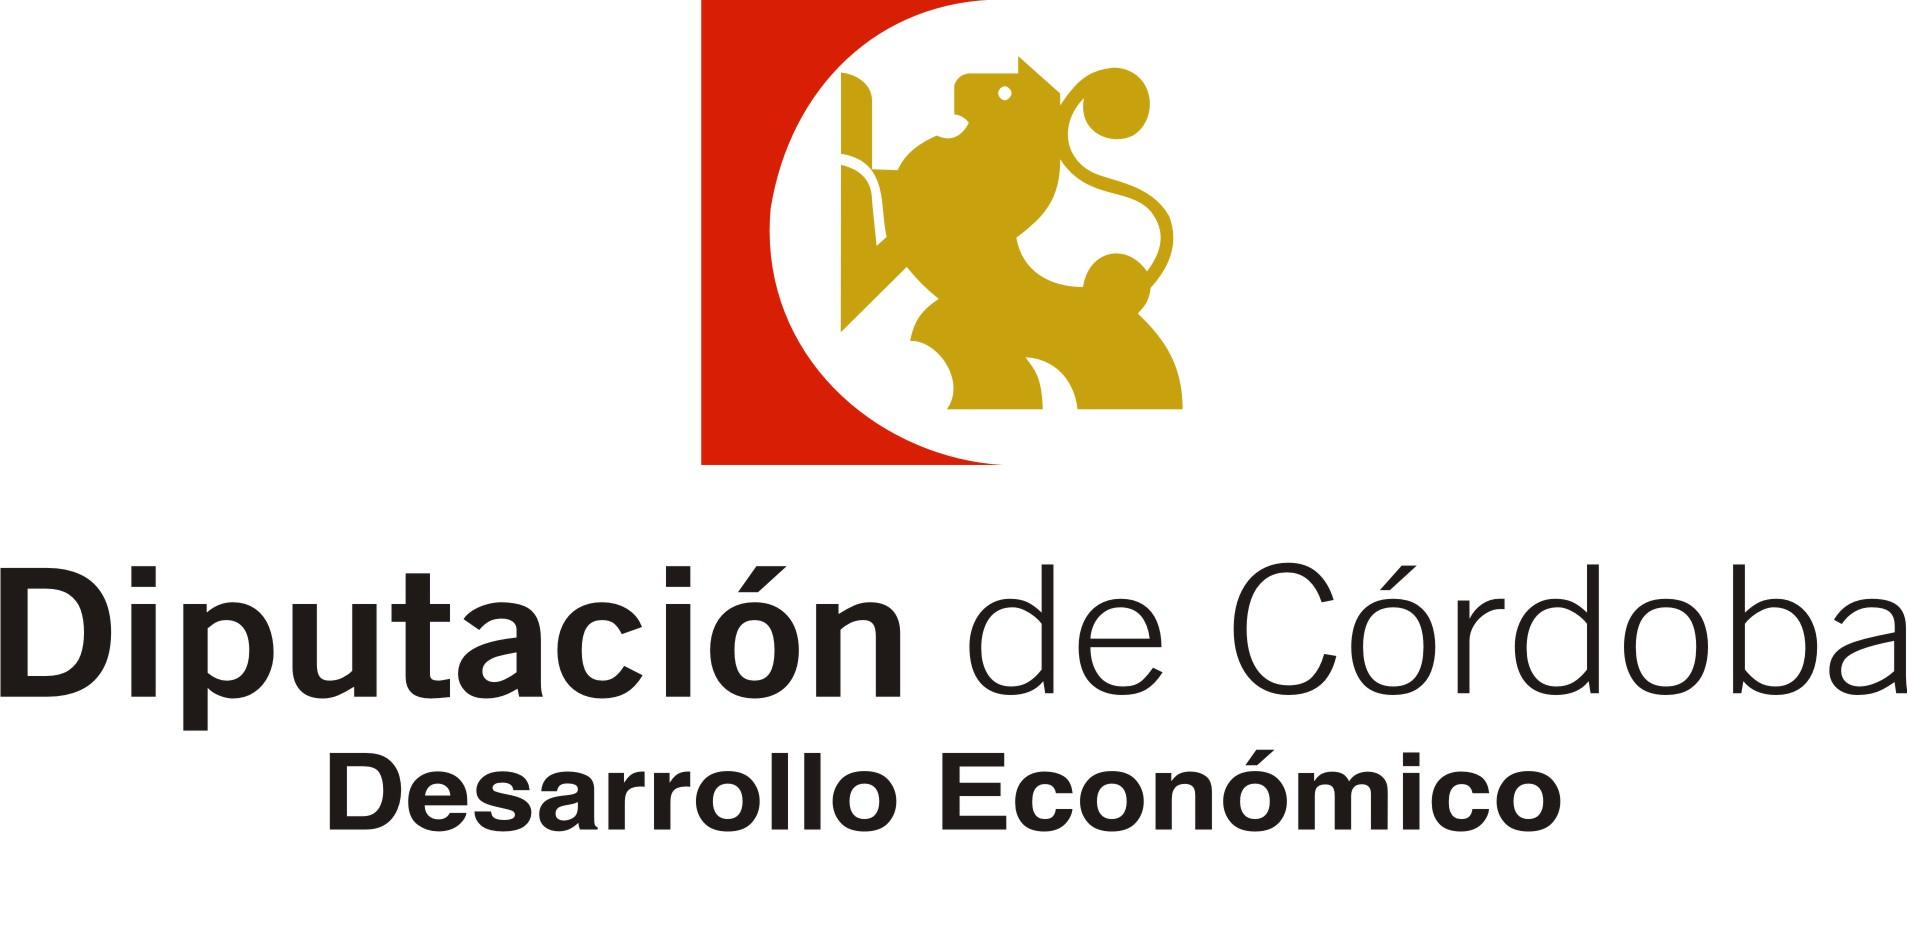 Diputación de Córdoba Desarrollo Económico